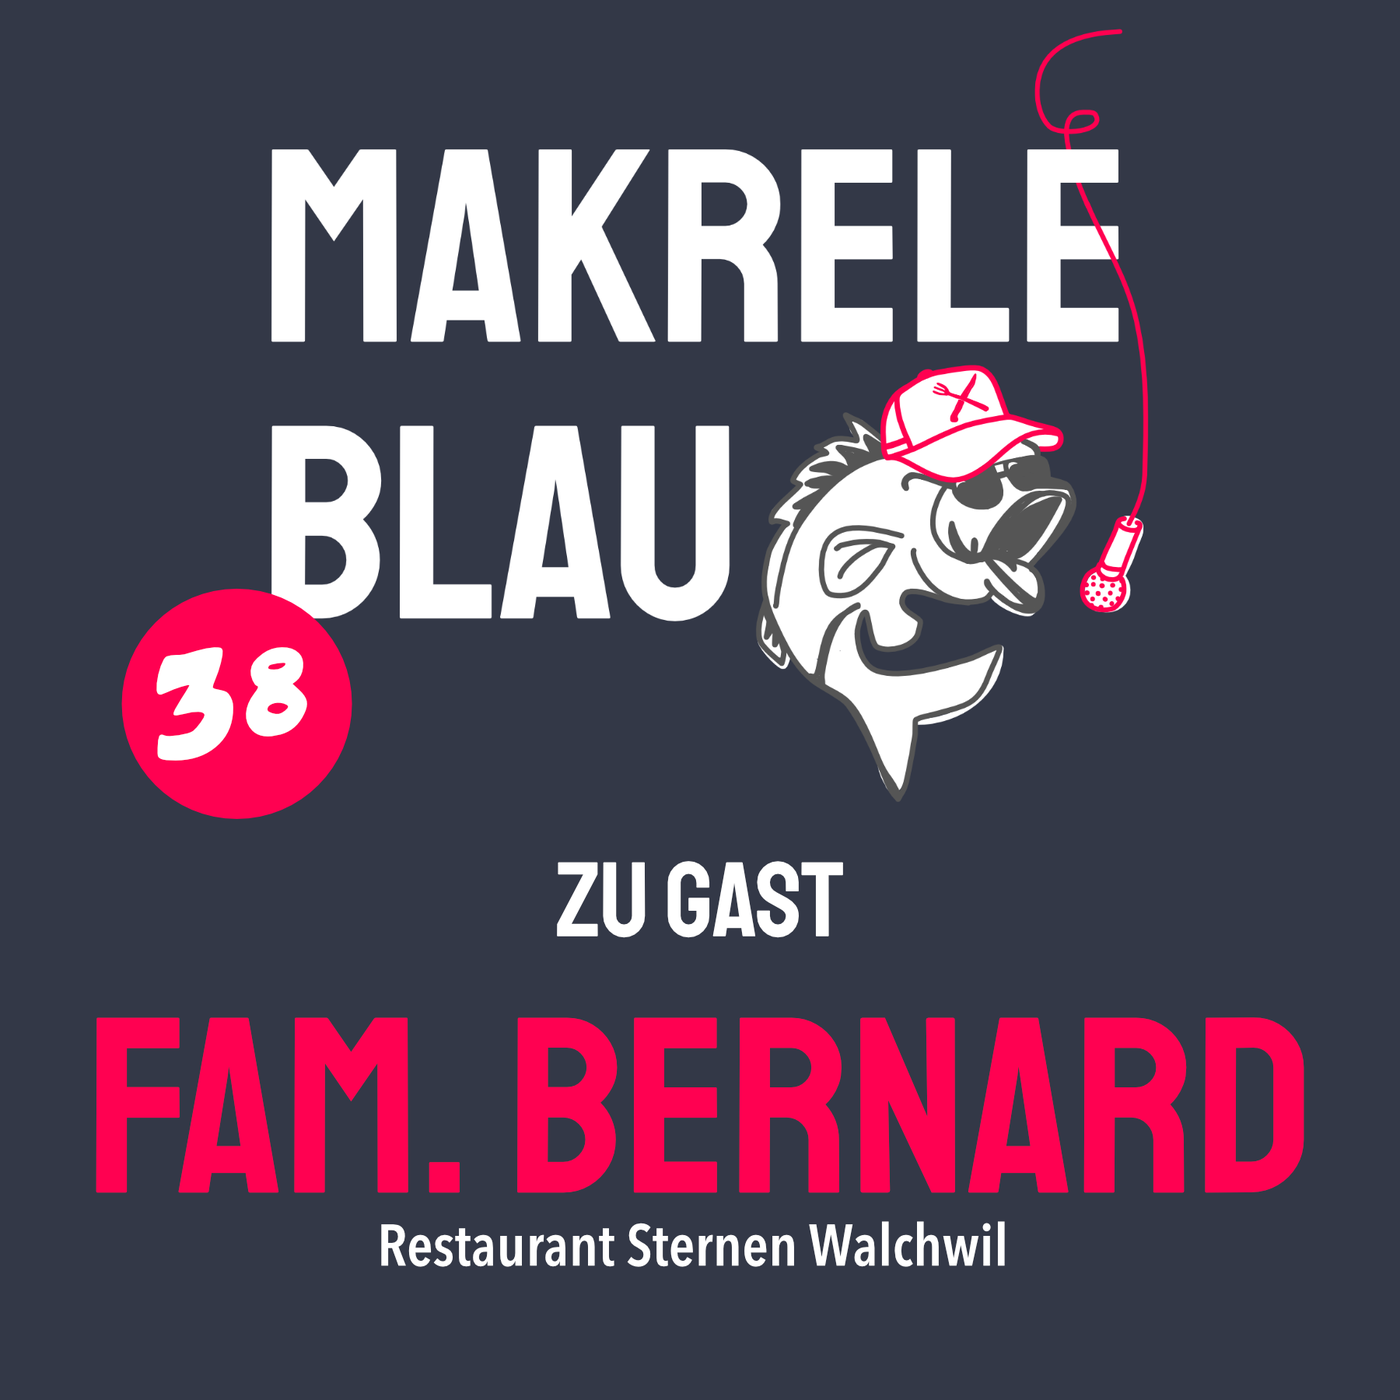 Makrele Blau #38 – We Are Family, mit dä Familie Bernard